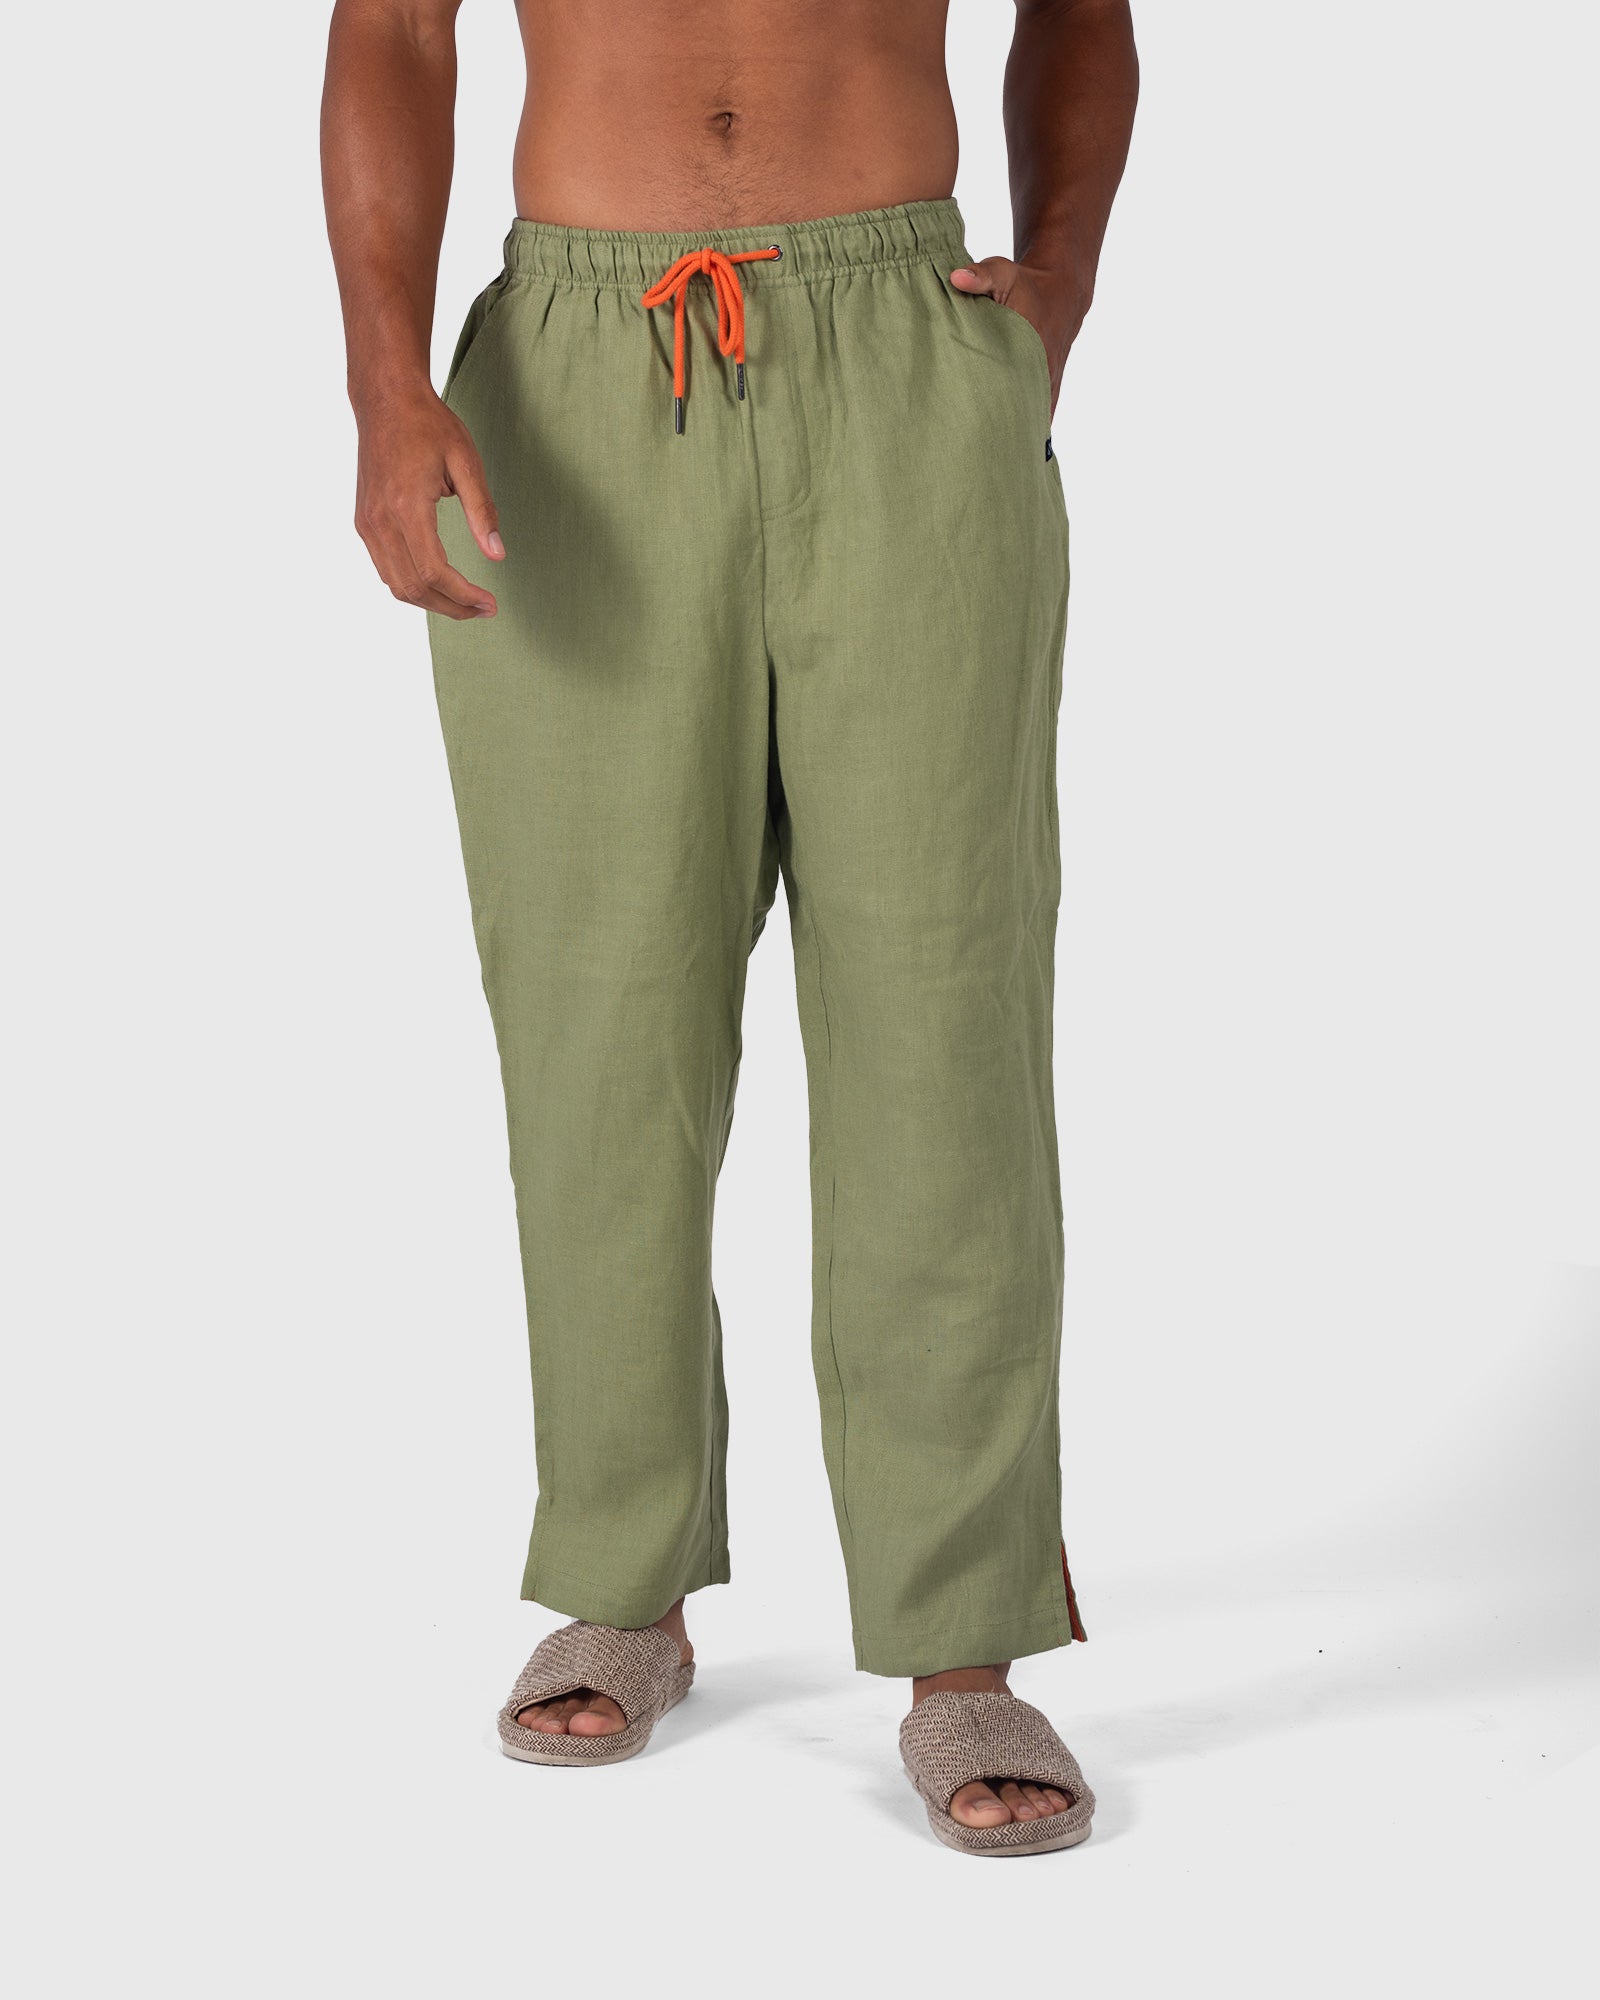 Regular Men's Linen Pants SOGLIO in Natural Melange Classic Linen Trousers  Casual Straight Leg Elastic Waist Pants With Pockets - Etsy